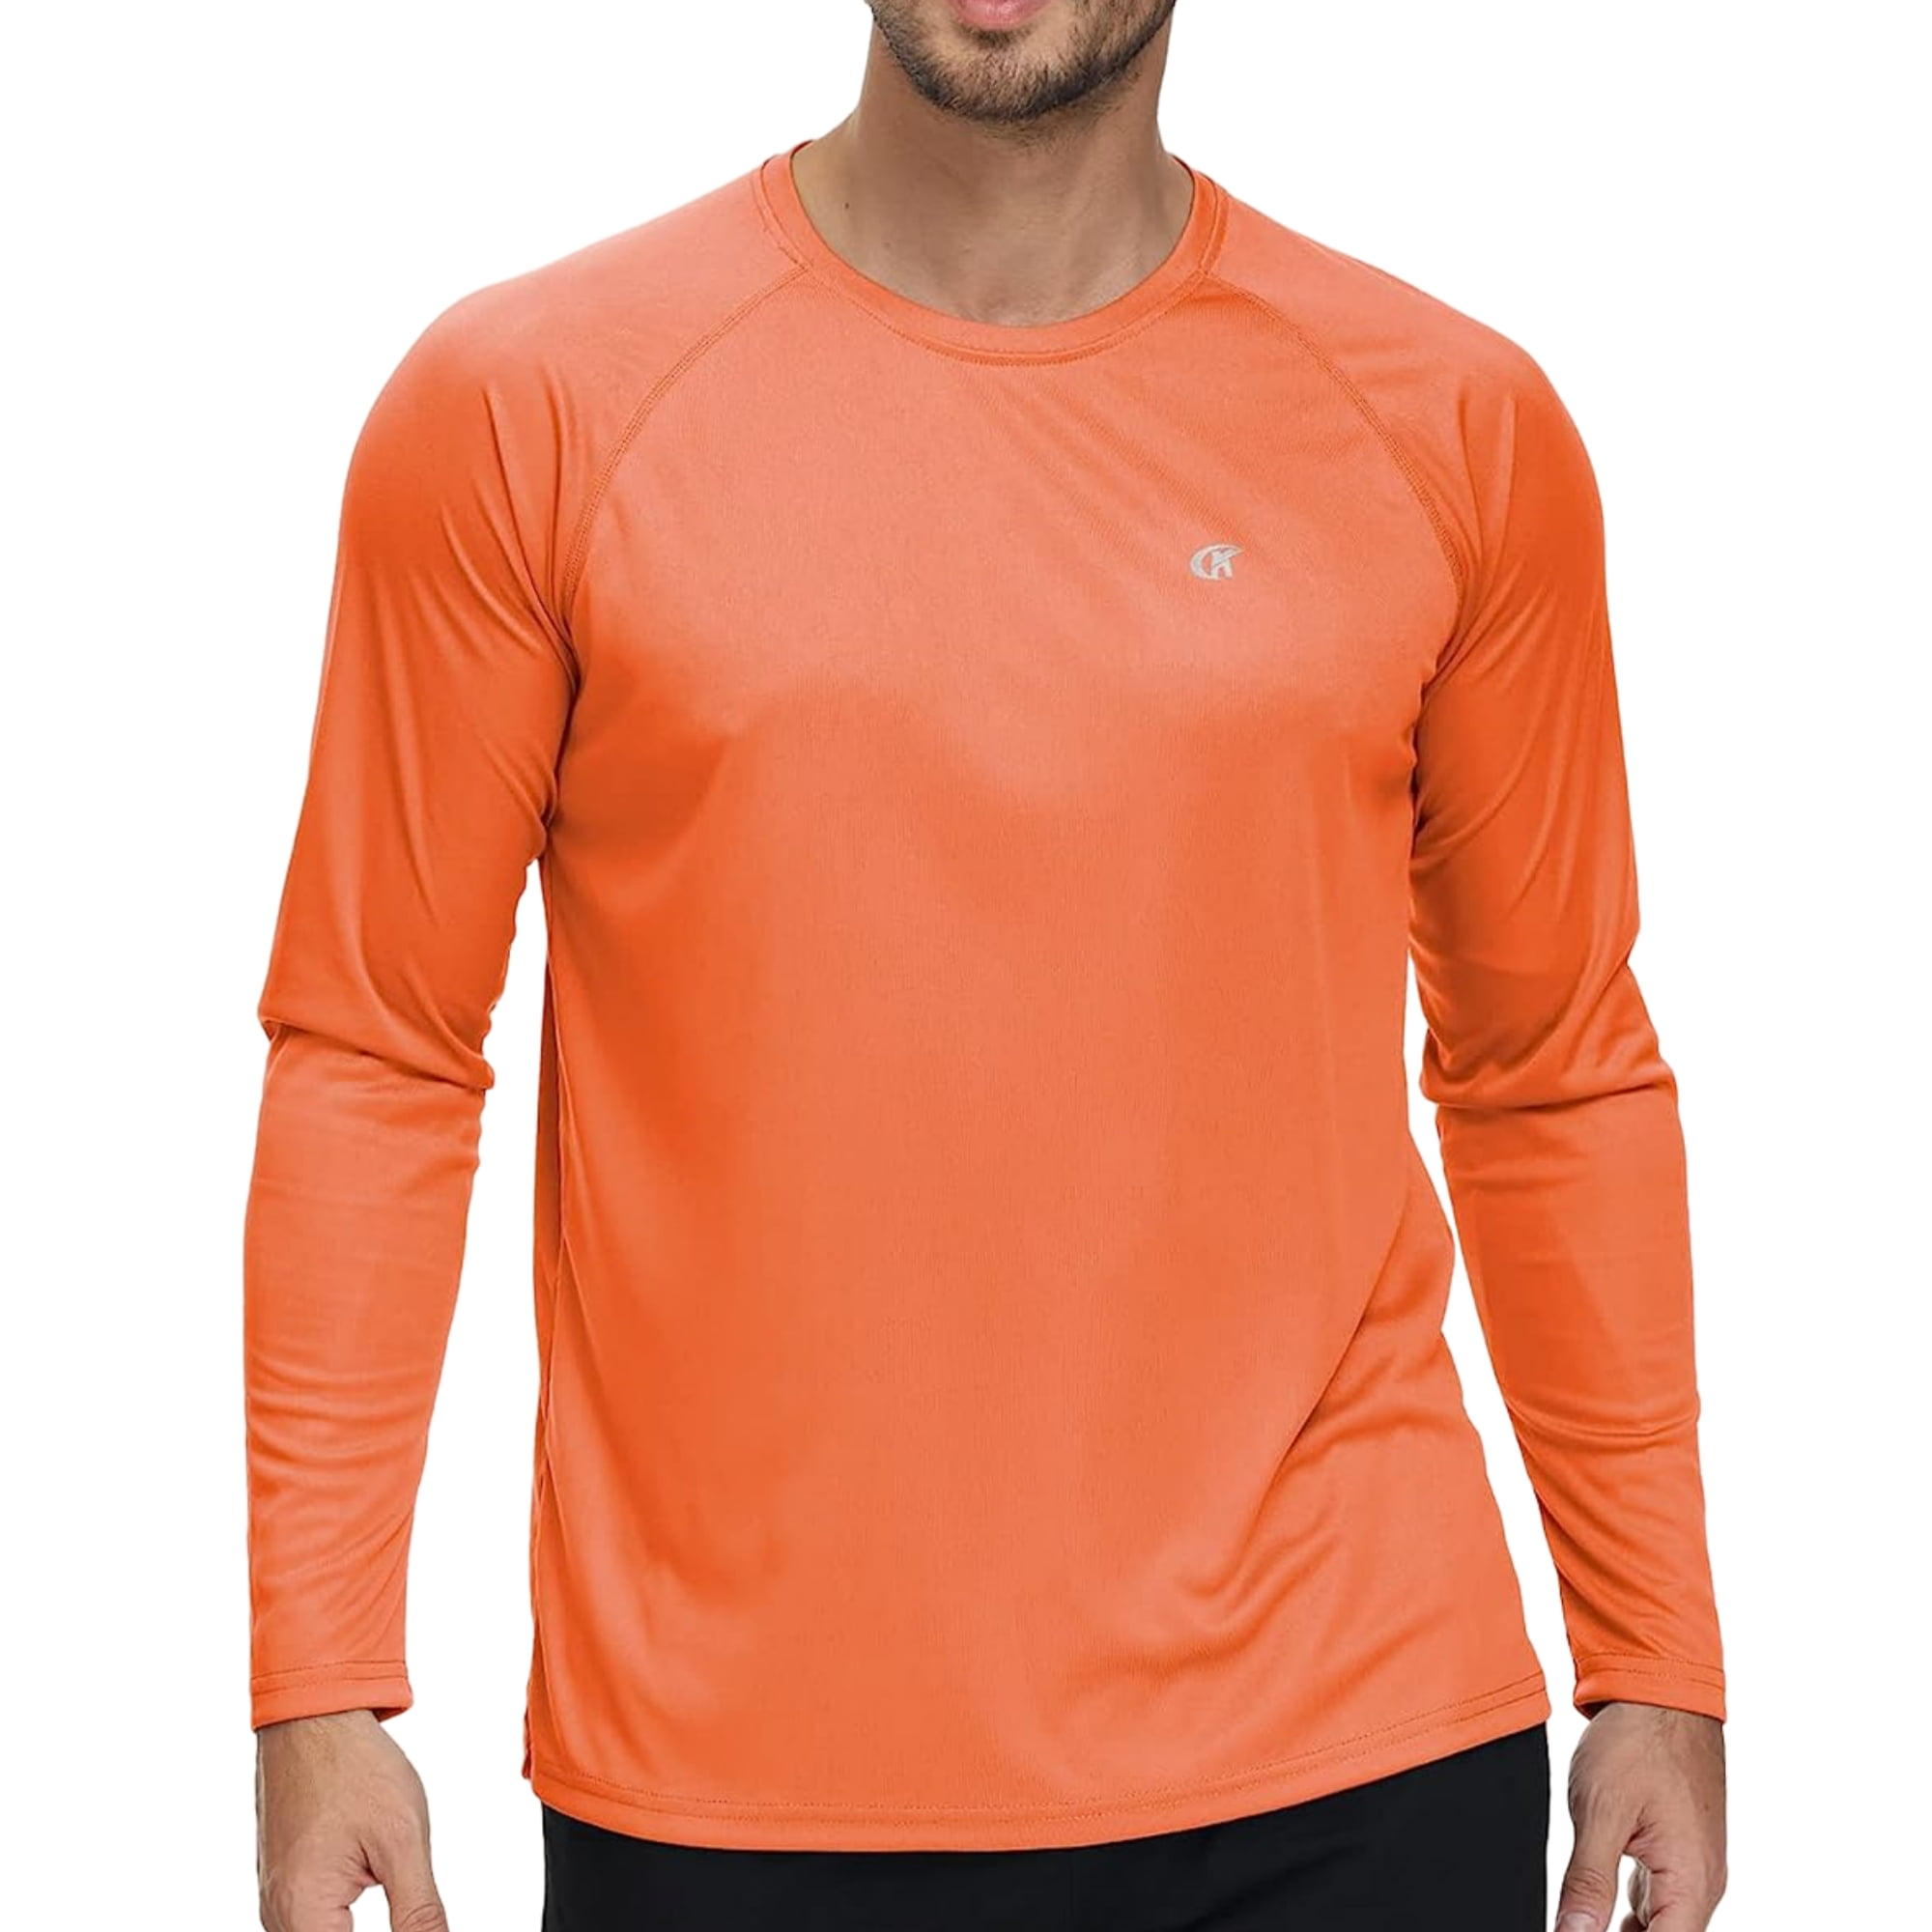 Satankud Men's Performance Long Sleeve Fishing Shirts Rashguard UPF 50+ UV  Sun Protection Tee Tops for Outdoors Running Hiking Workout T-Shirt